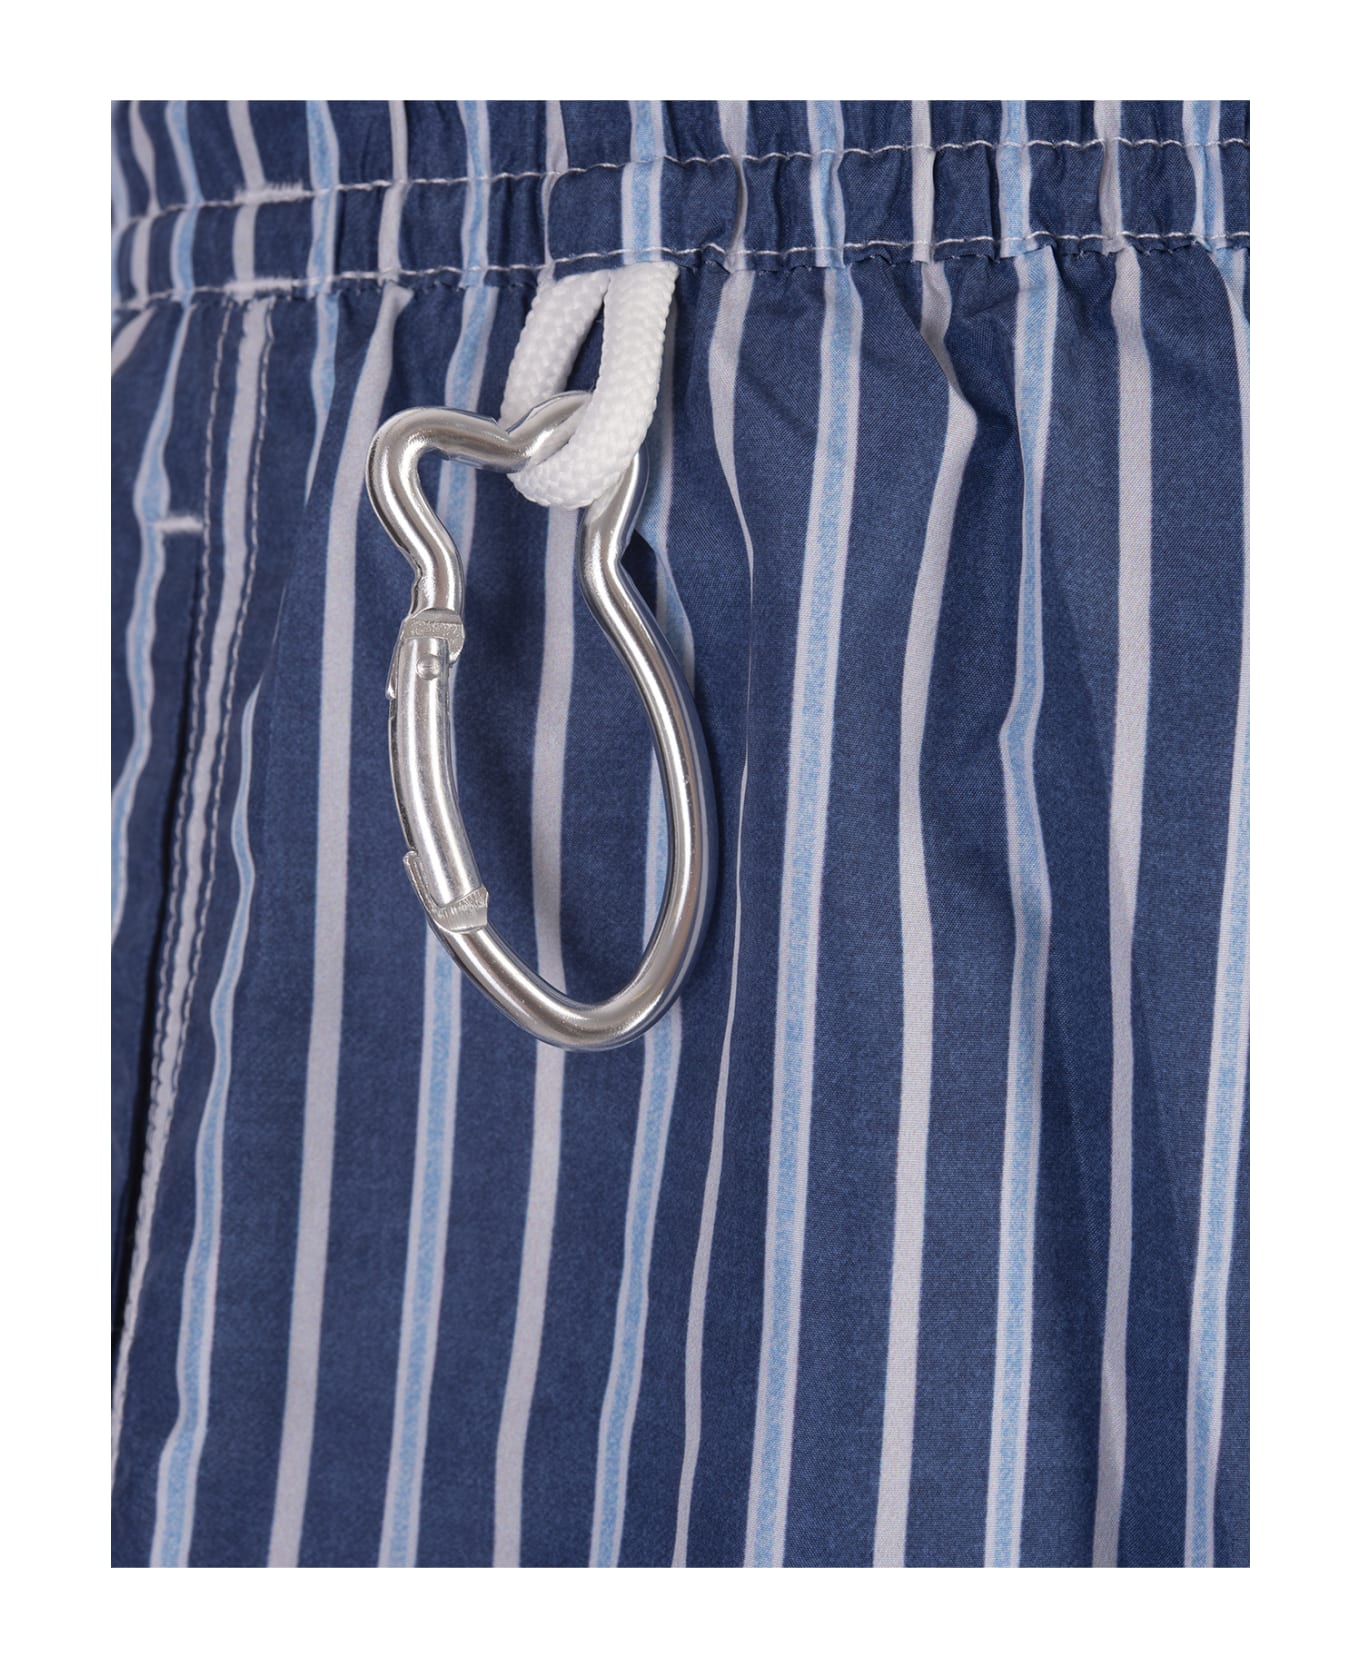 Fedeli Dark Blue Striped Swim Shorts - Blue スイムトランクス